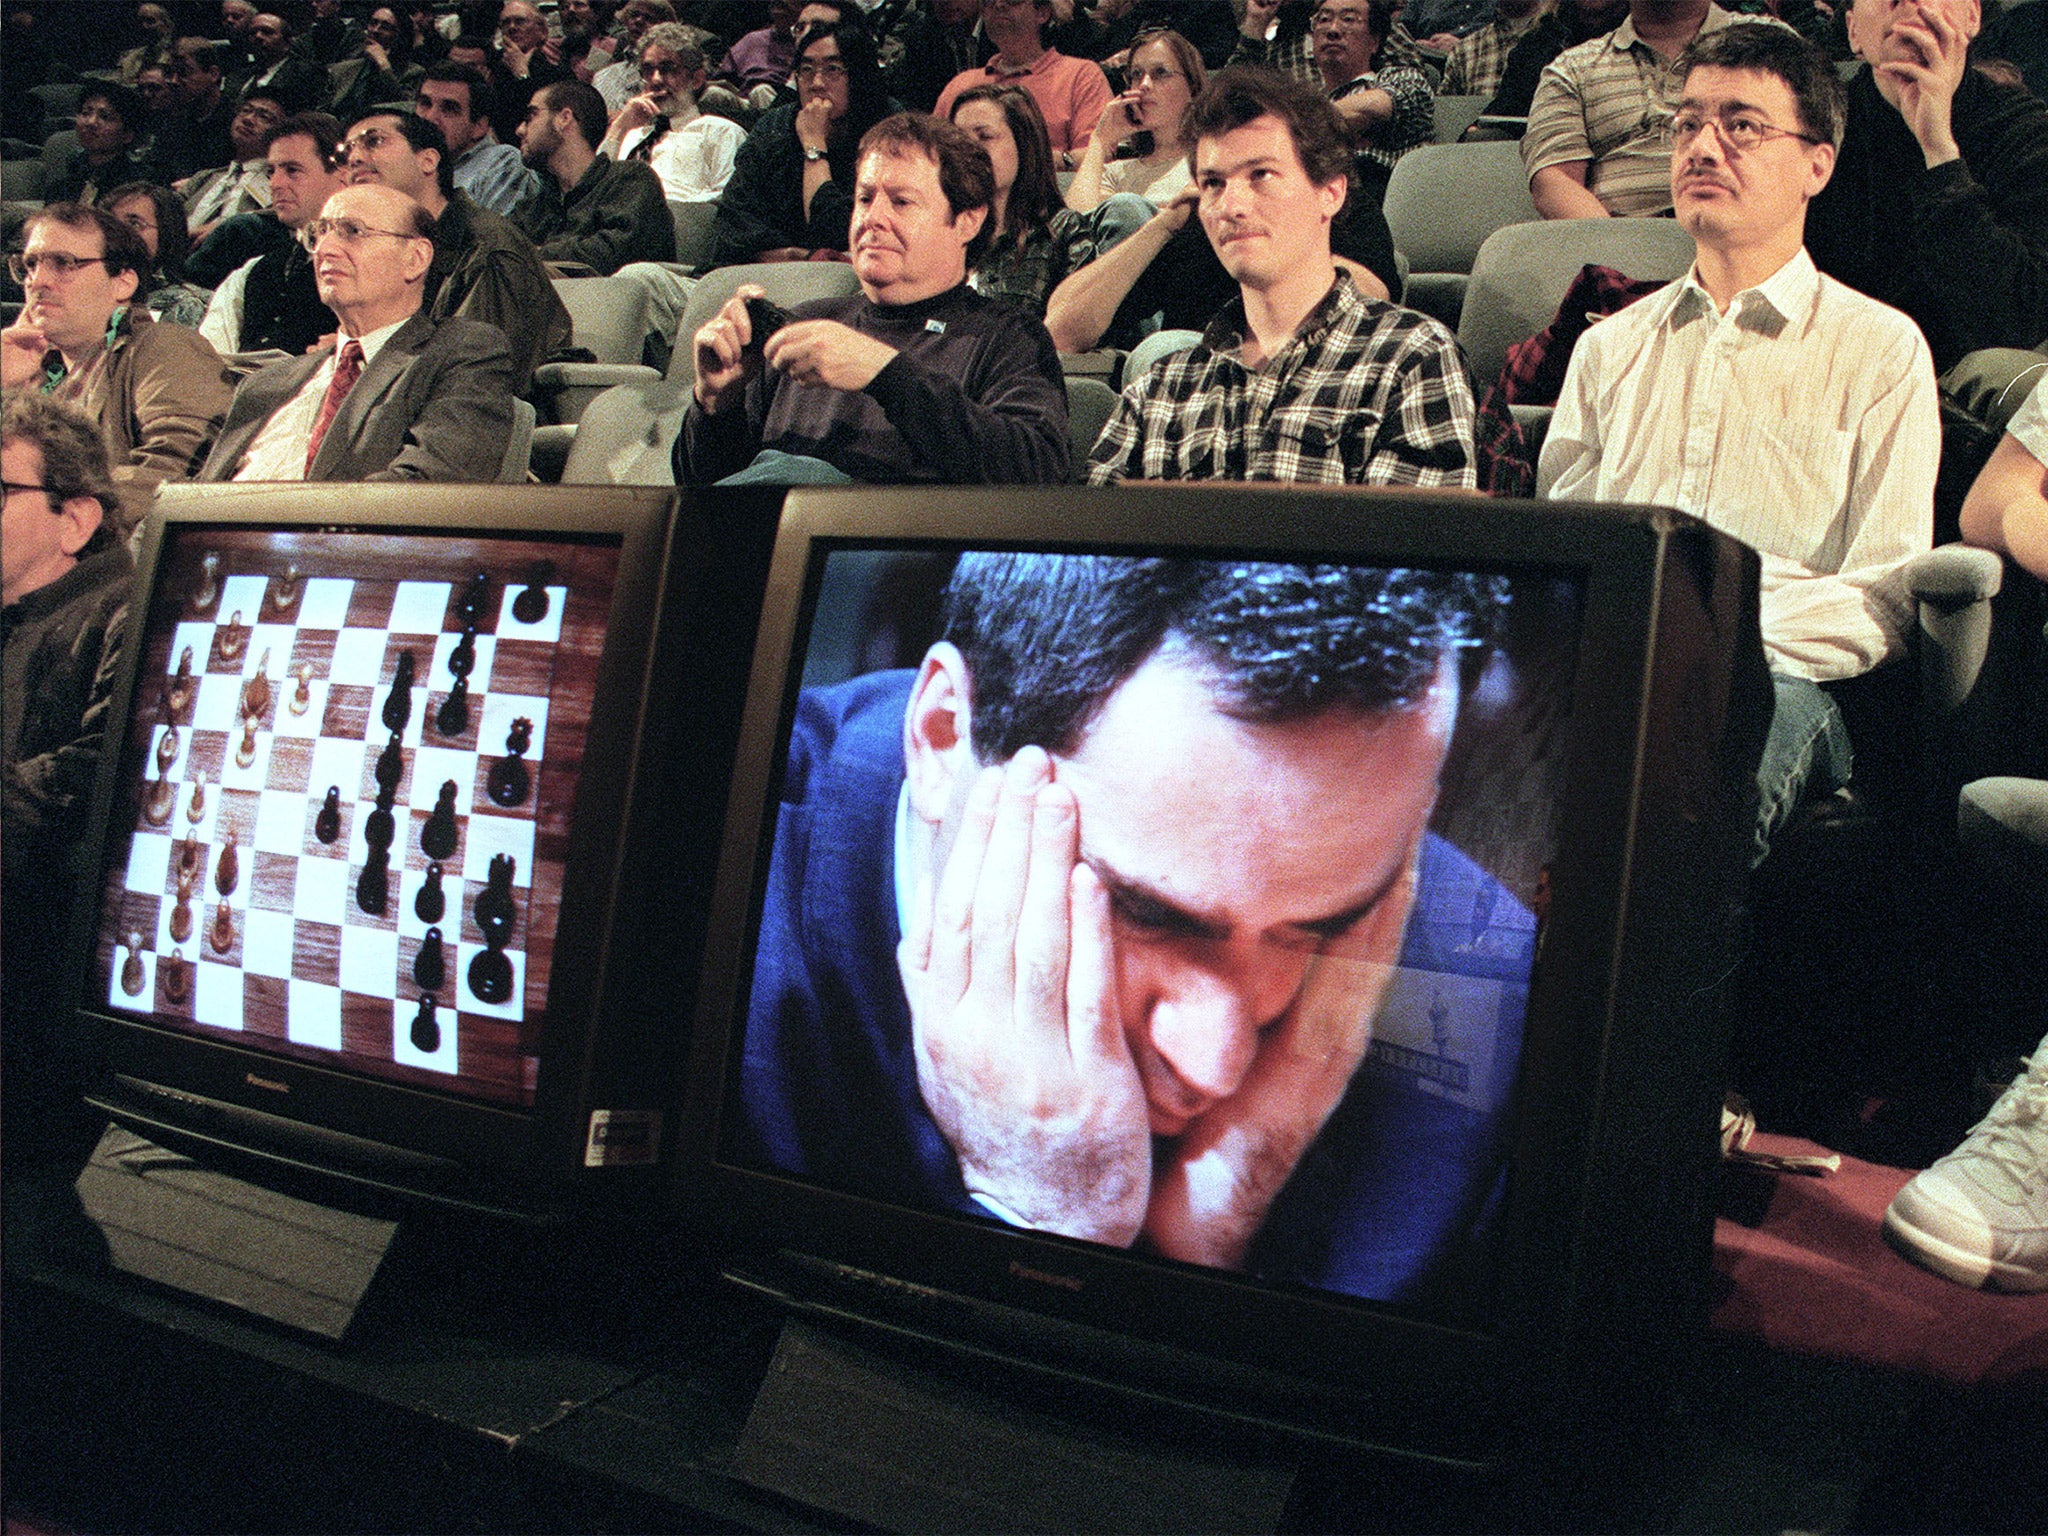 Chess enthusiasts watch as Deep Blue beats World Champion Garry Kasparov in 1997 (Getty)